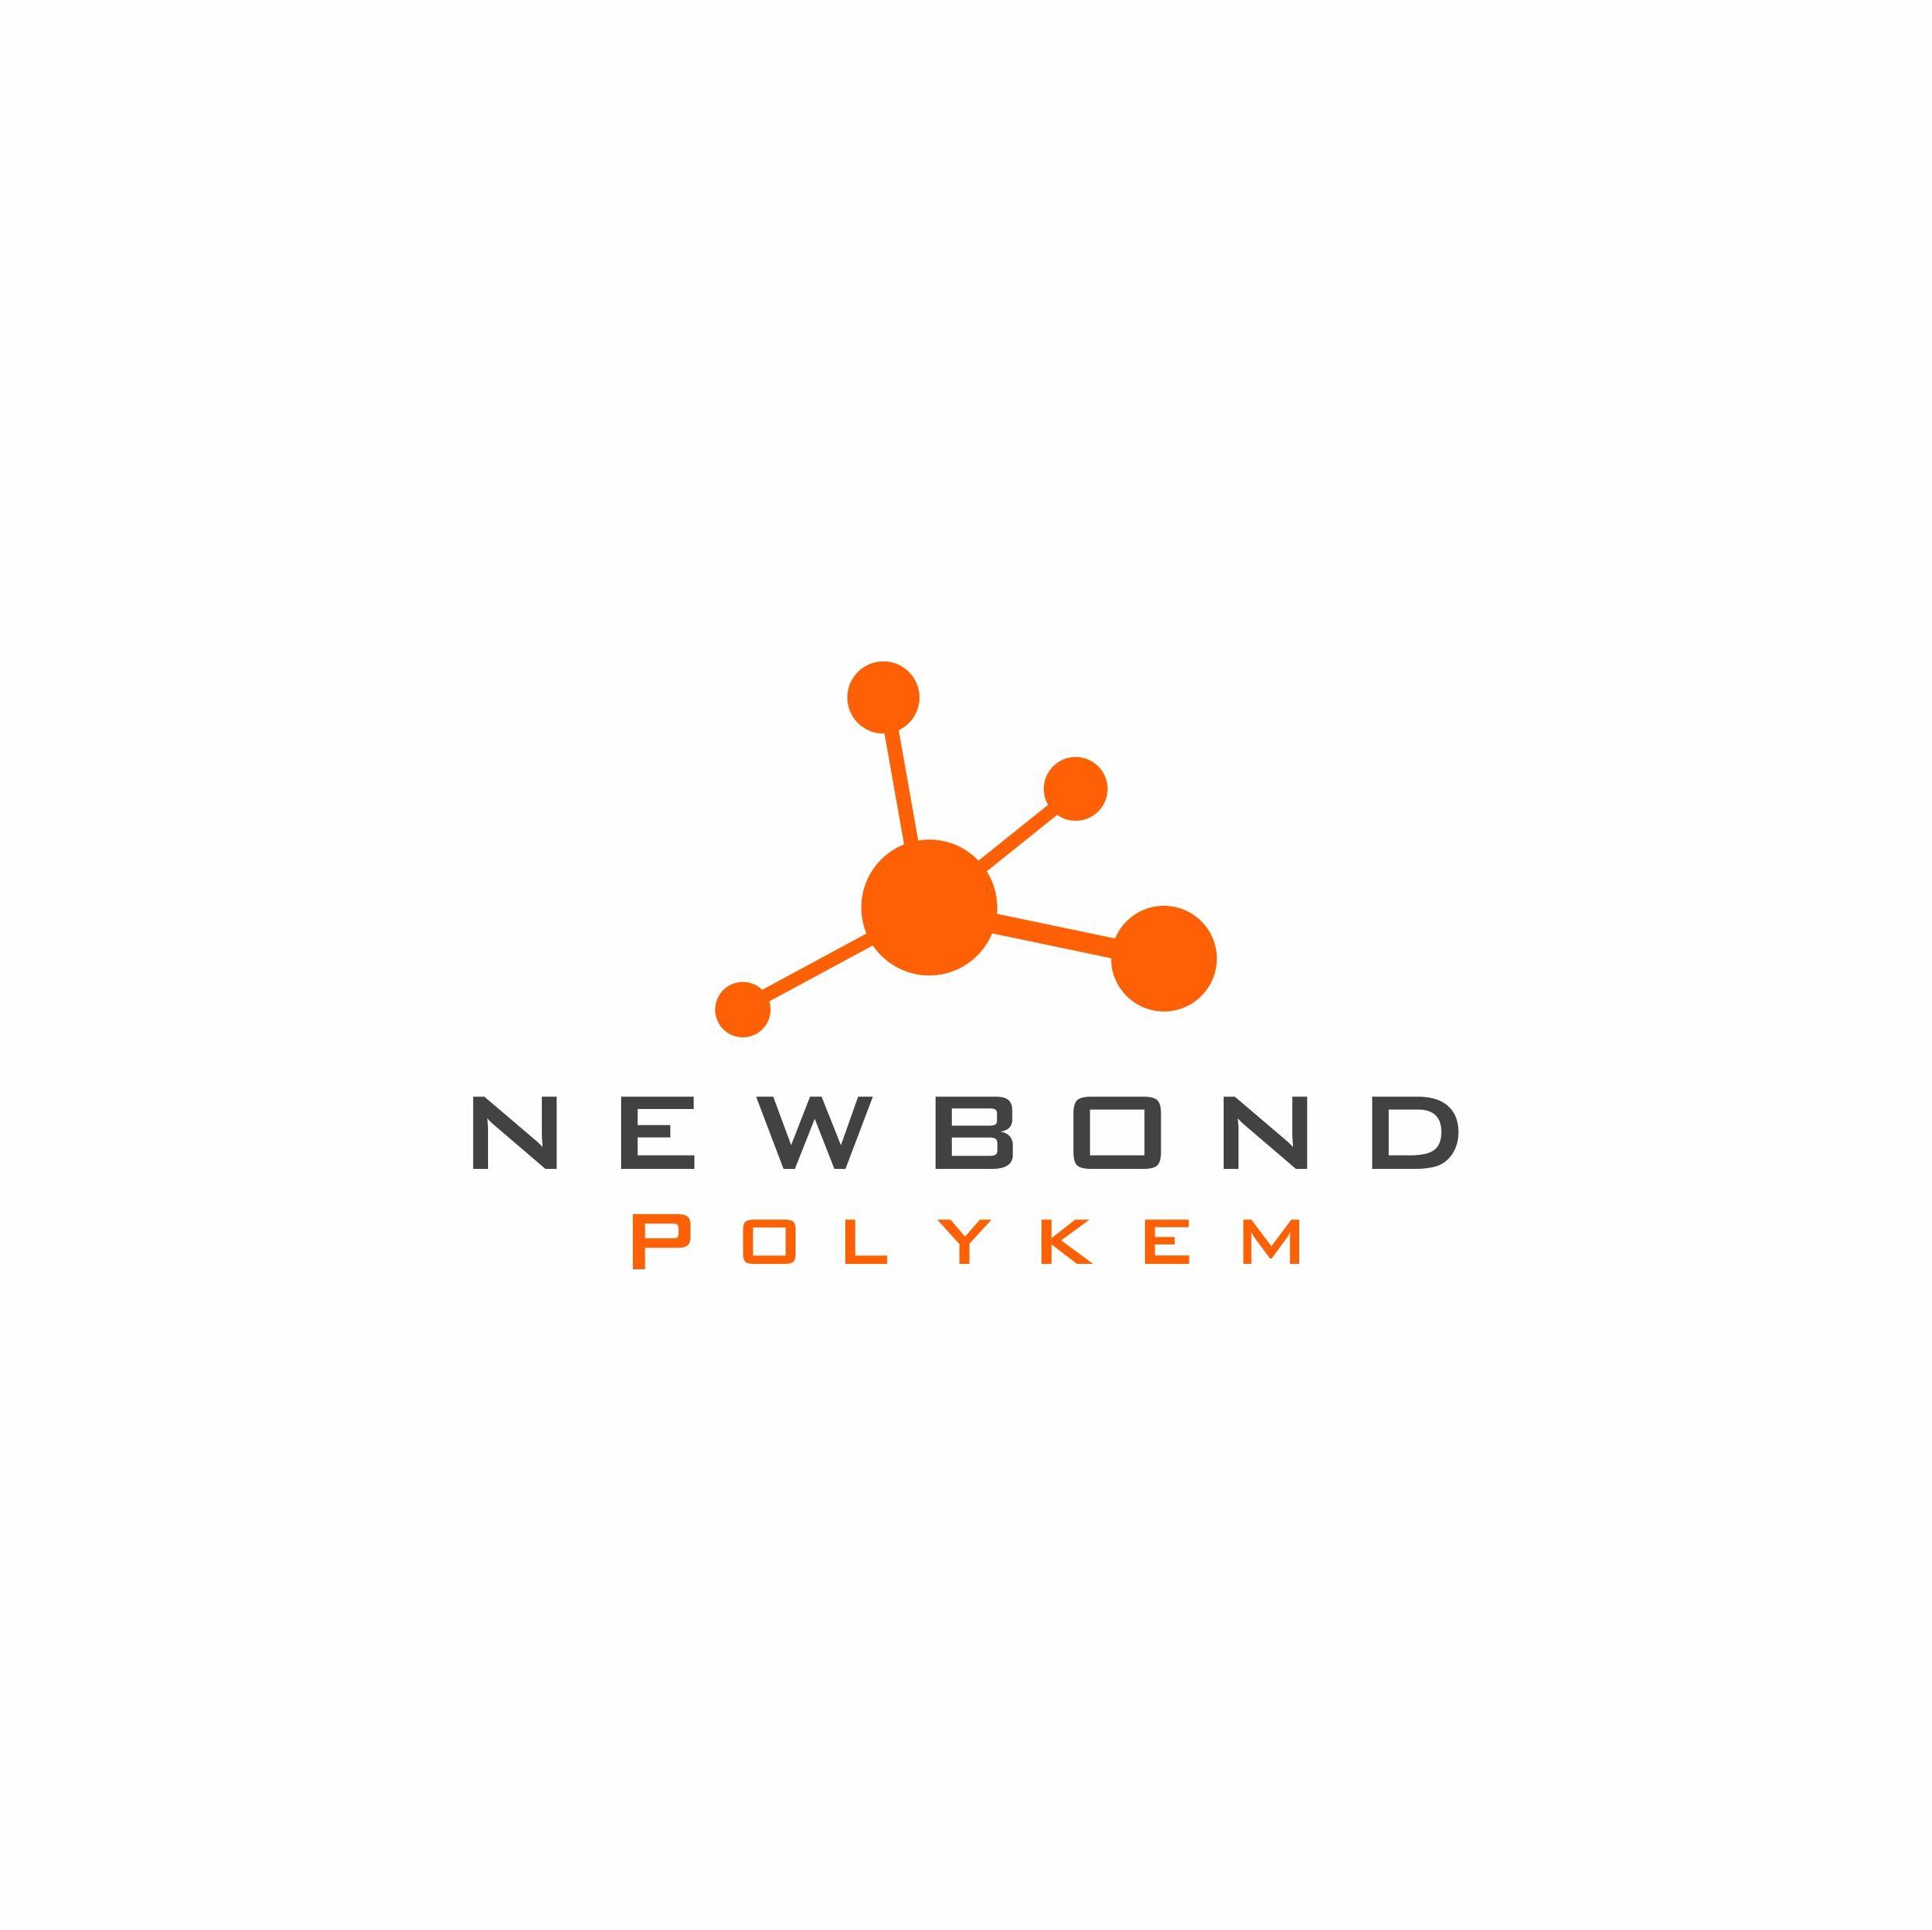 Chemical Company Logo - NewBond Polykem : Chemical Company logo concept #logo #logos ...